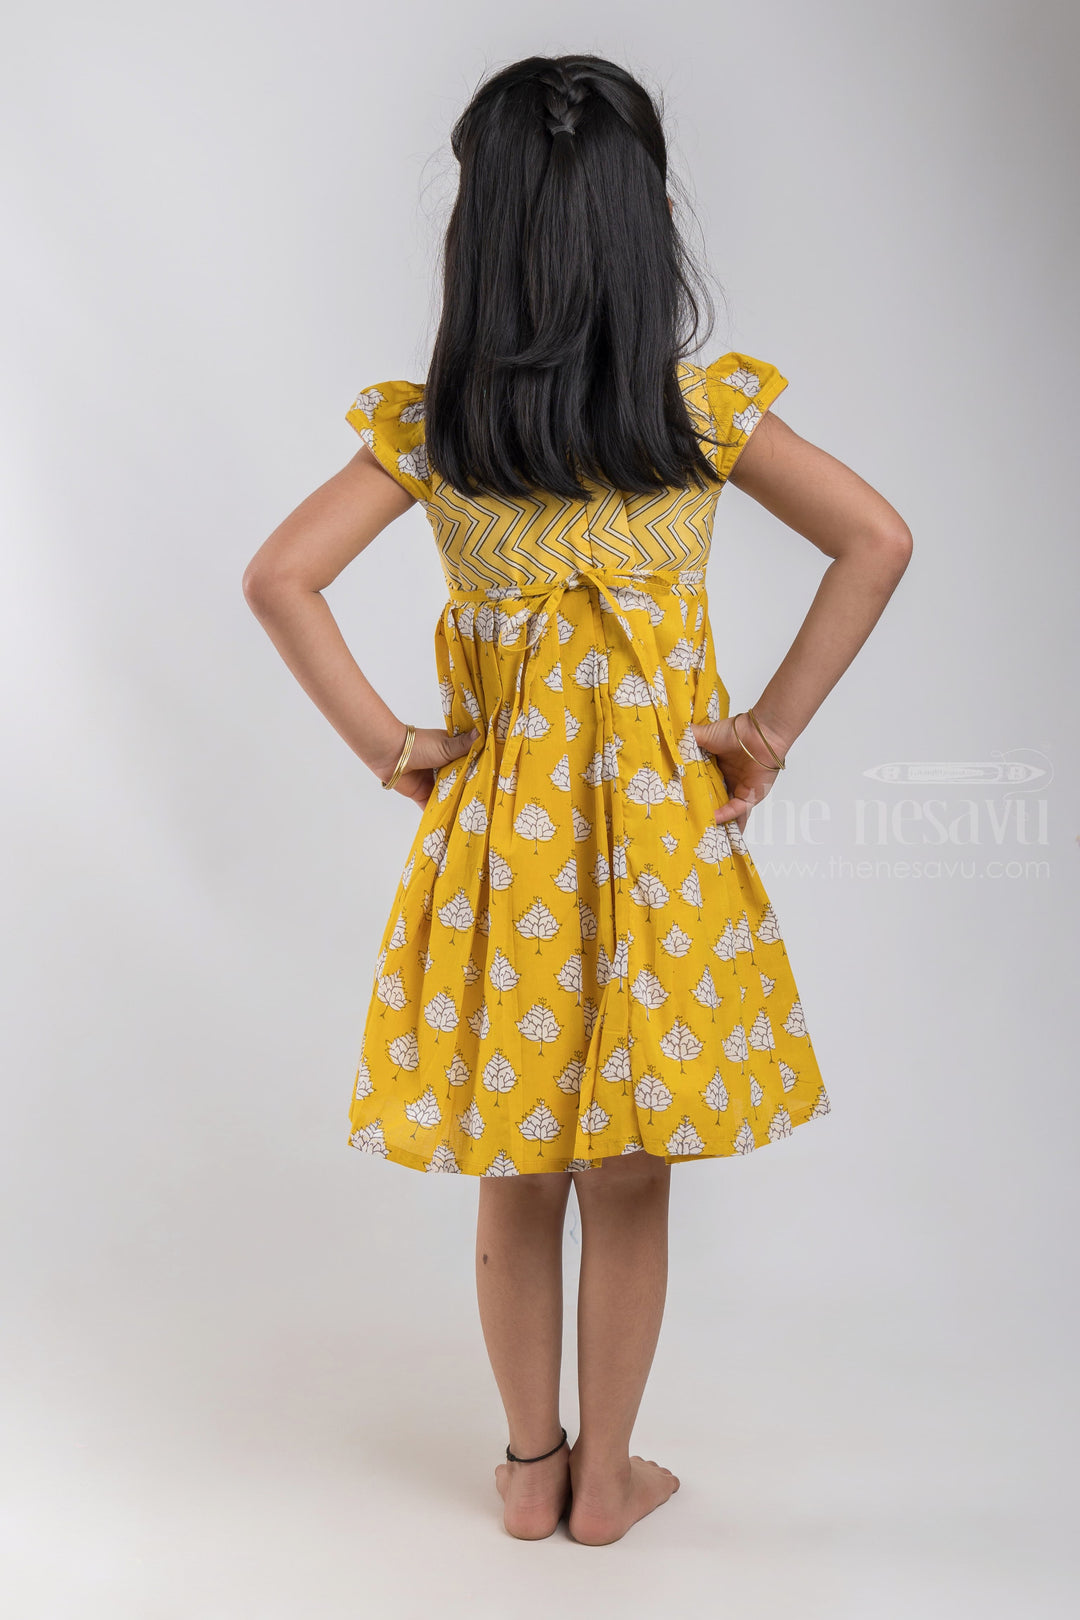 The Nesavu Girls Cotton Frock Bright Yellow Zigzag Printed Soft Cotton Baby Girls Dress psr silks Nesavu